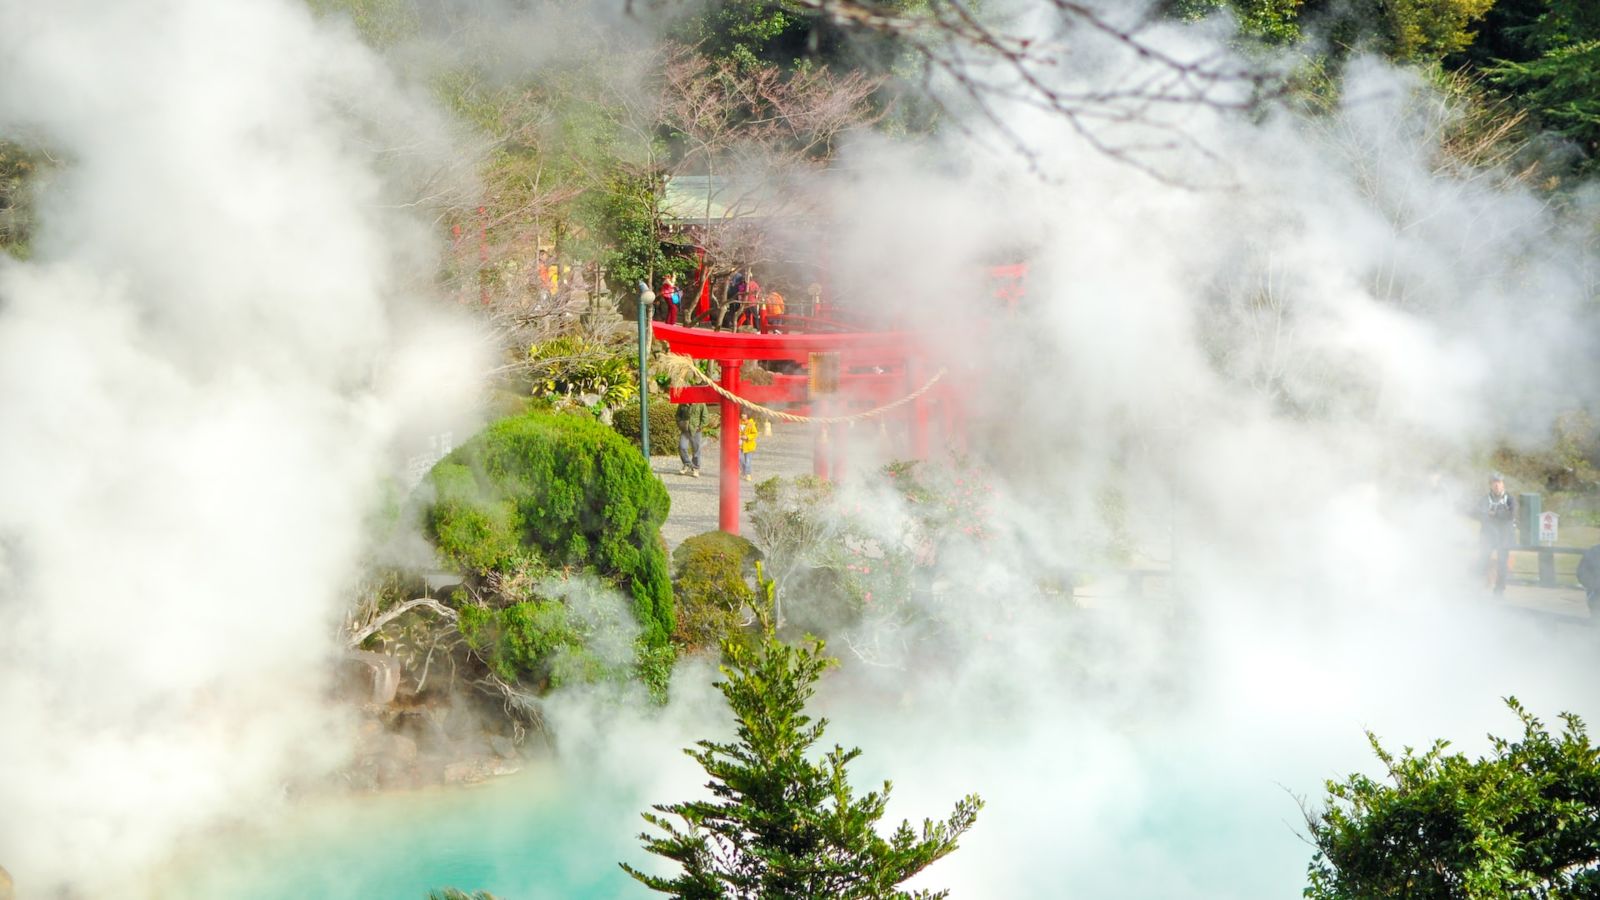 Beppu Hot Springs, Kyushu - Point Hacks